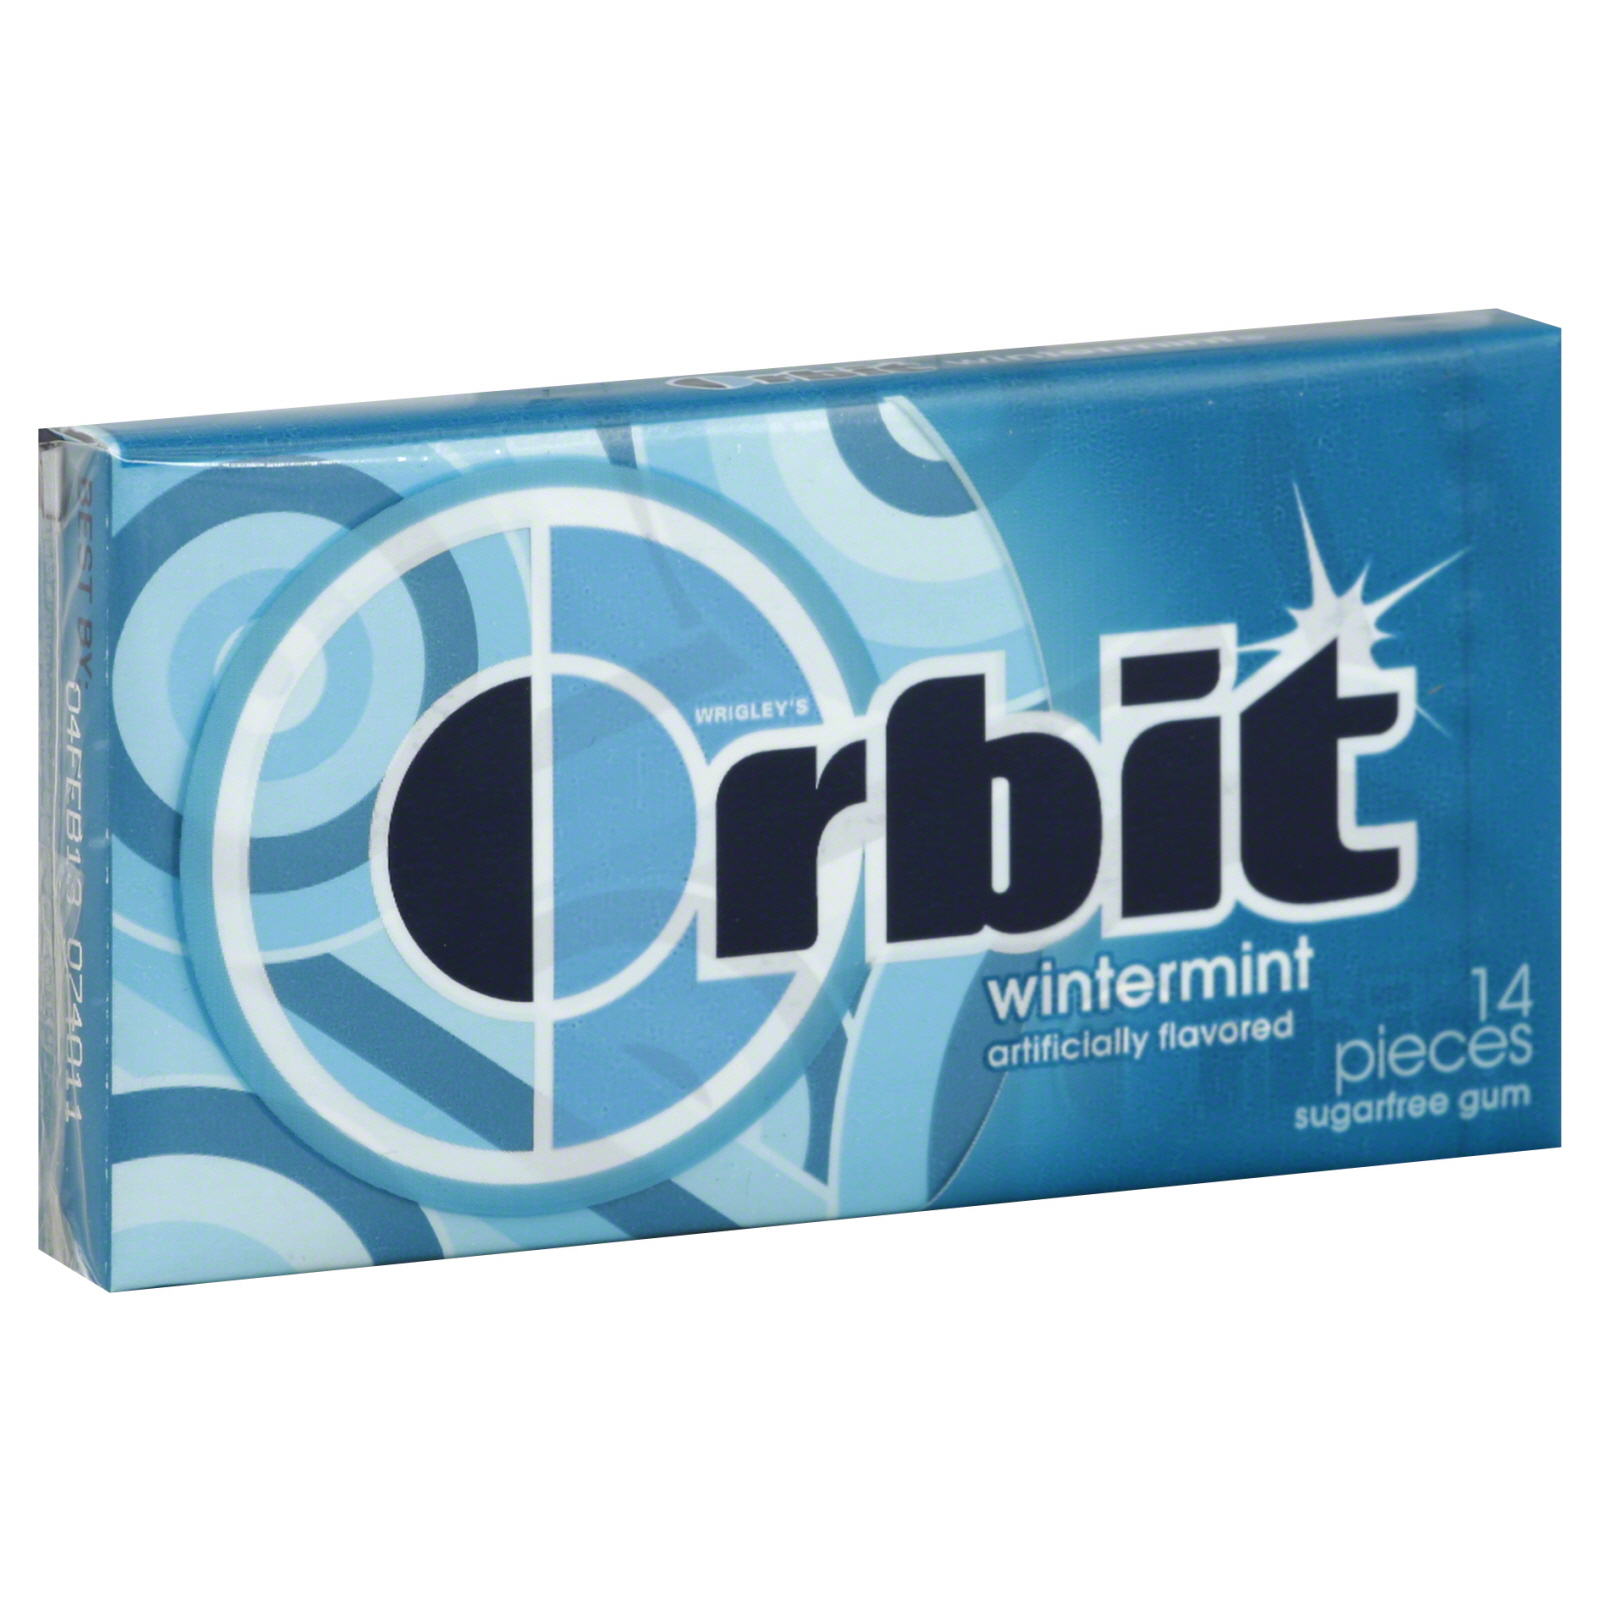 Orbit Gum, Sugarfree, Wintermint, 14 pieces